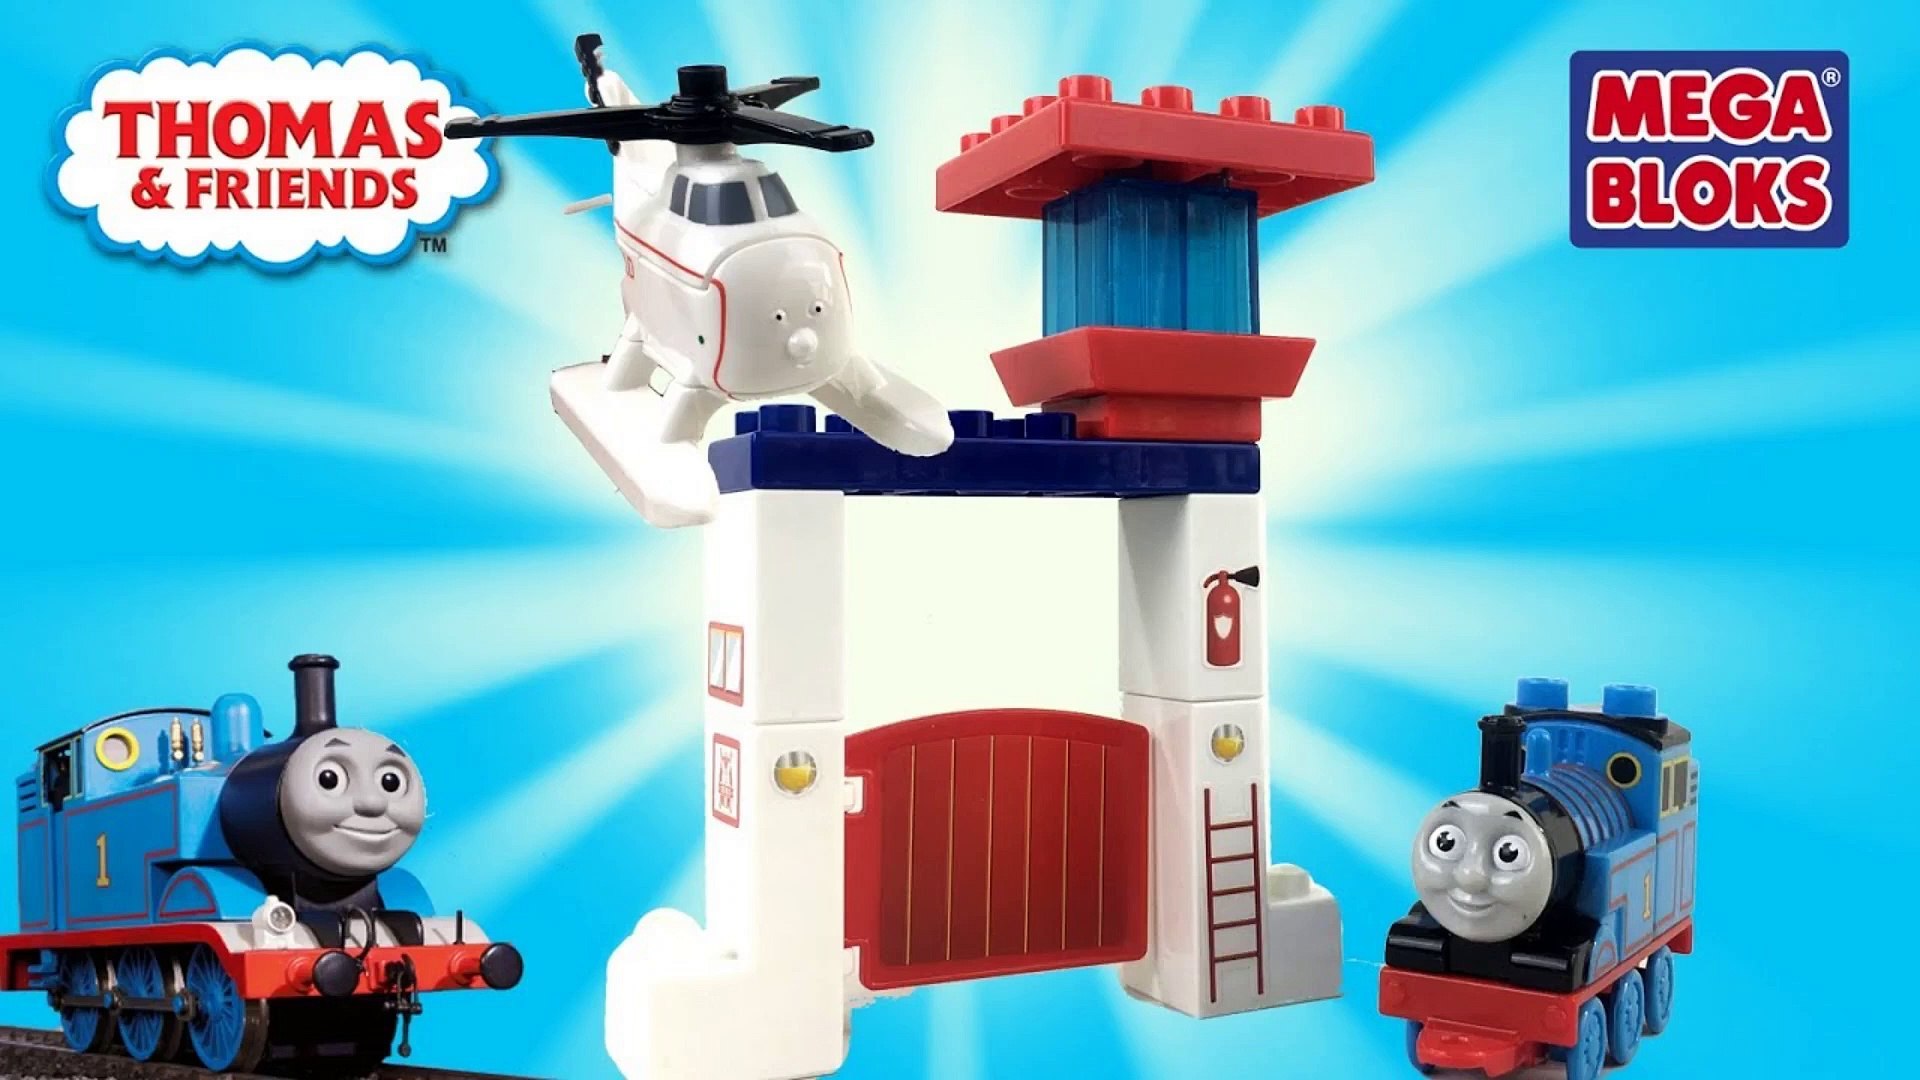 Mega Bloks Thomas & Friends THOMAS Building Kit Toy Playset 